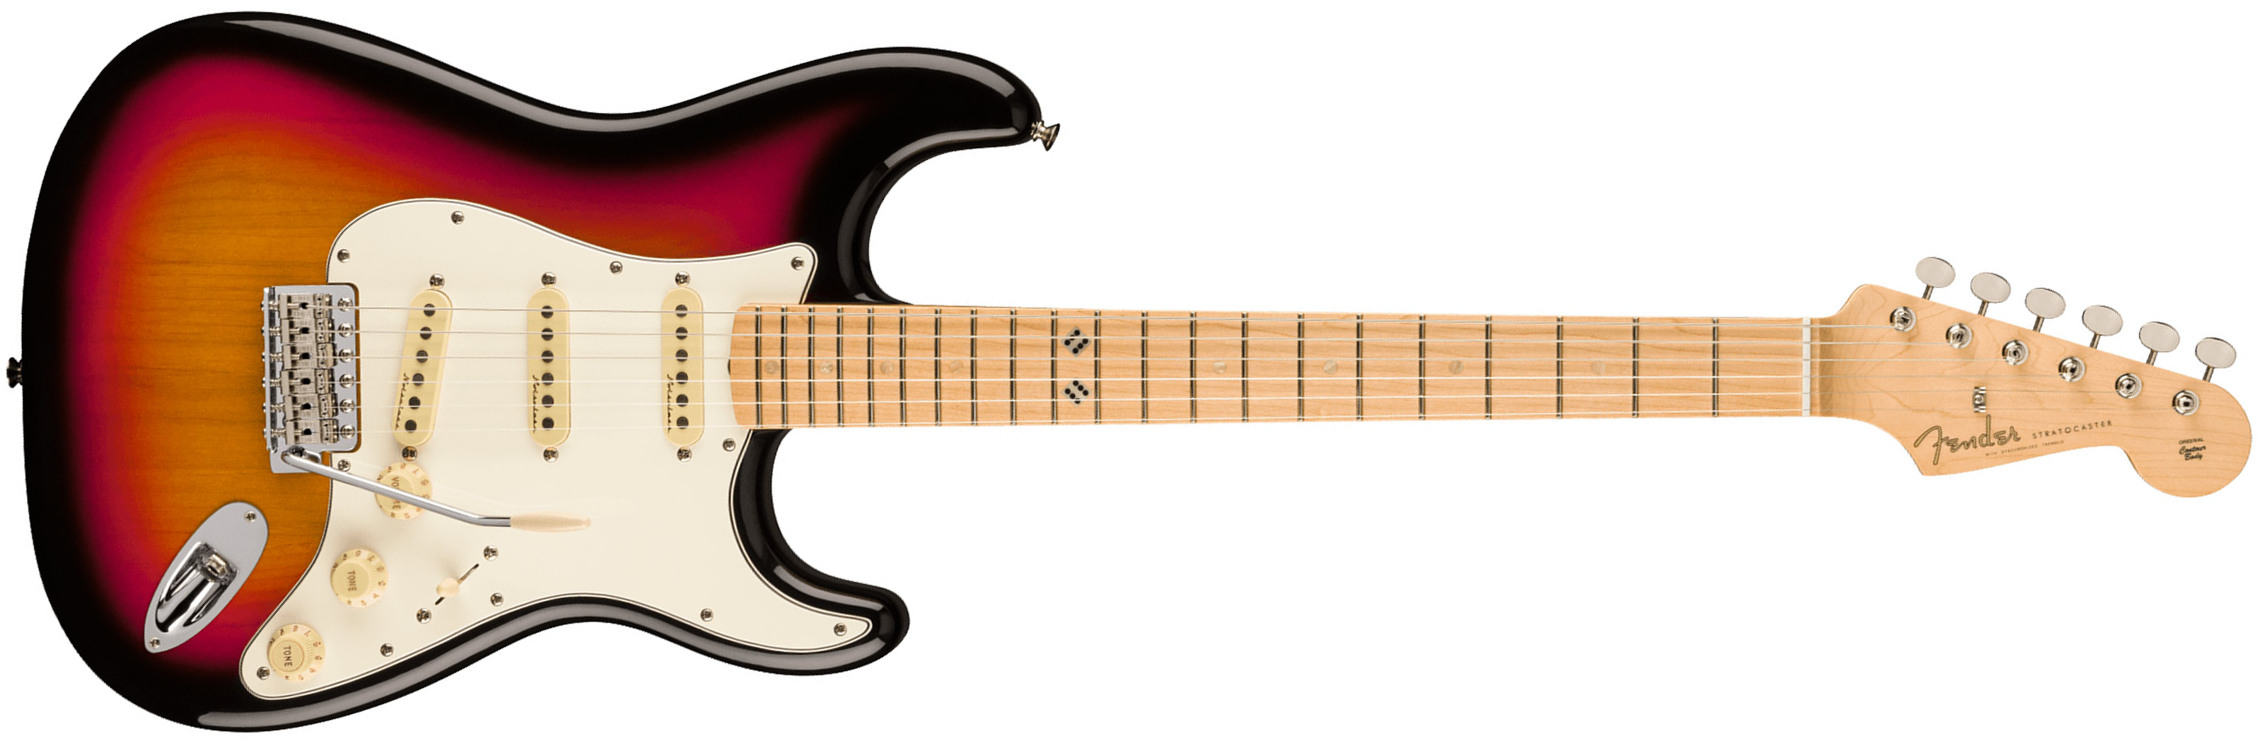 Fender Steve Lacy Strat People Pleaser Mex Signature 3s Trem Mn - Chaos Burst - E-Gitarre in Str-Form - Main picture